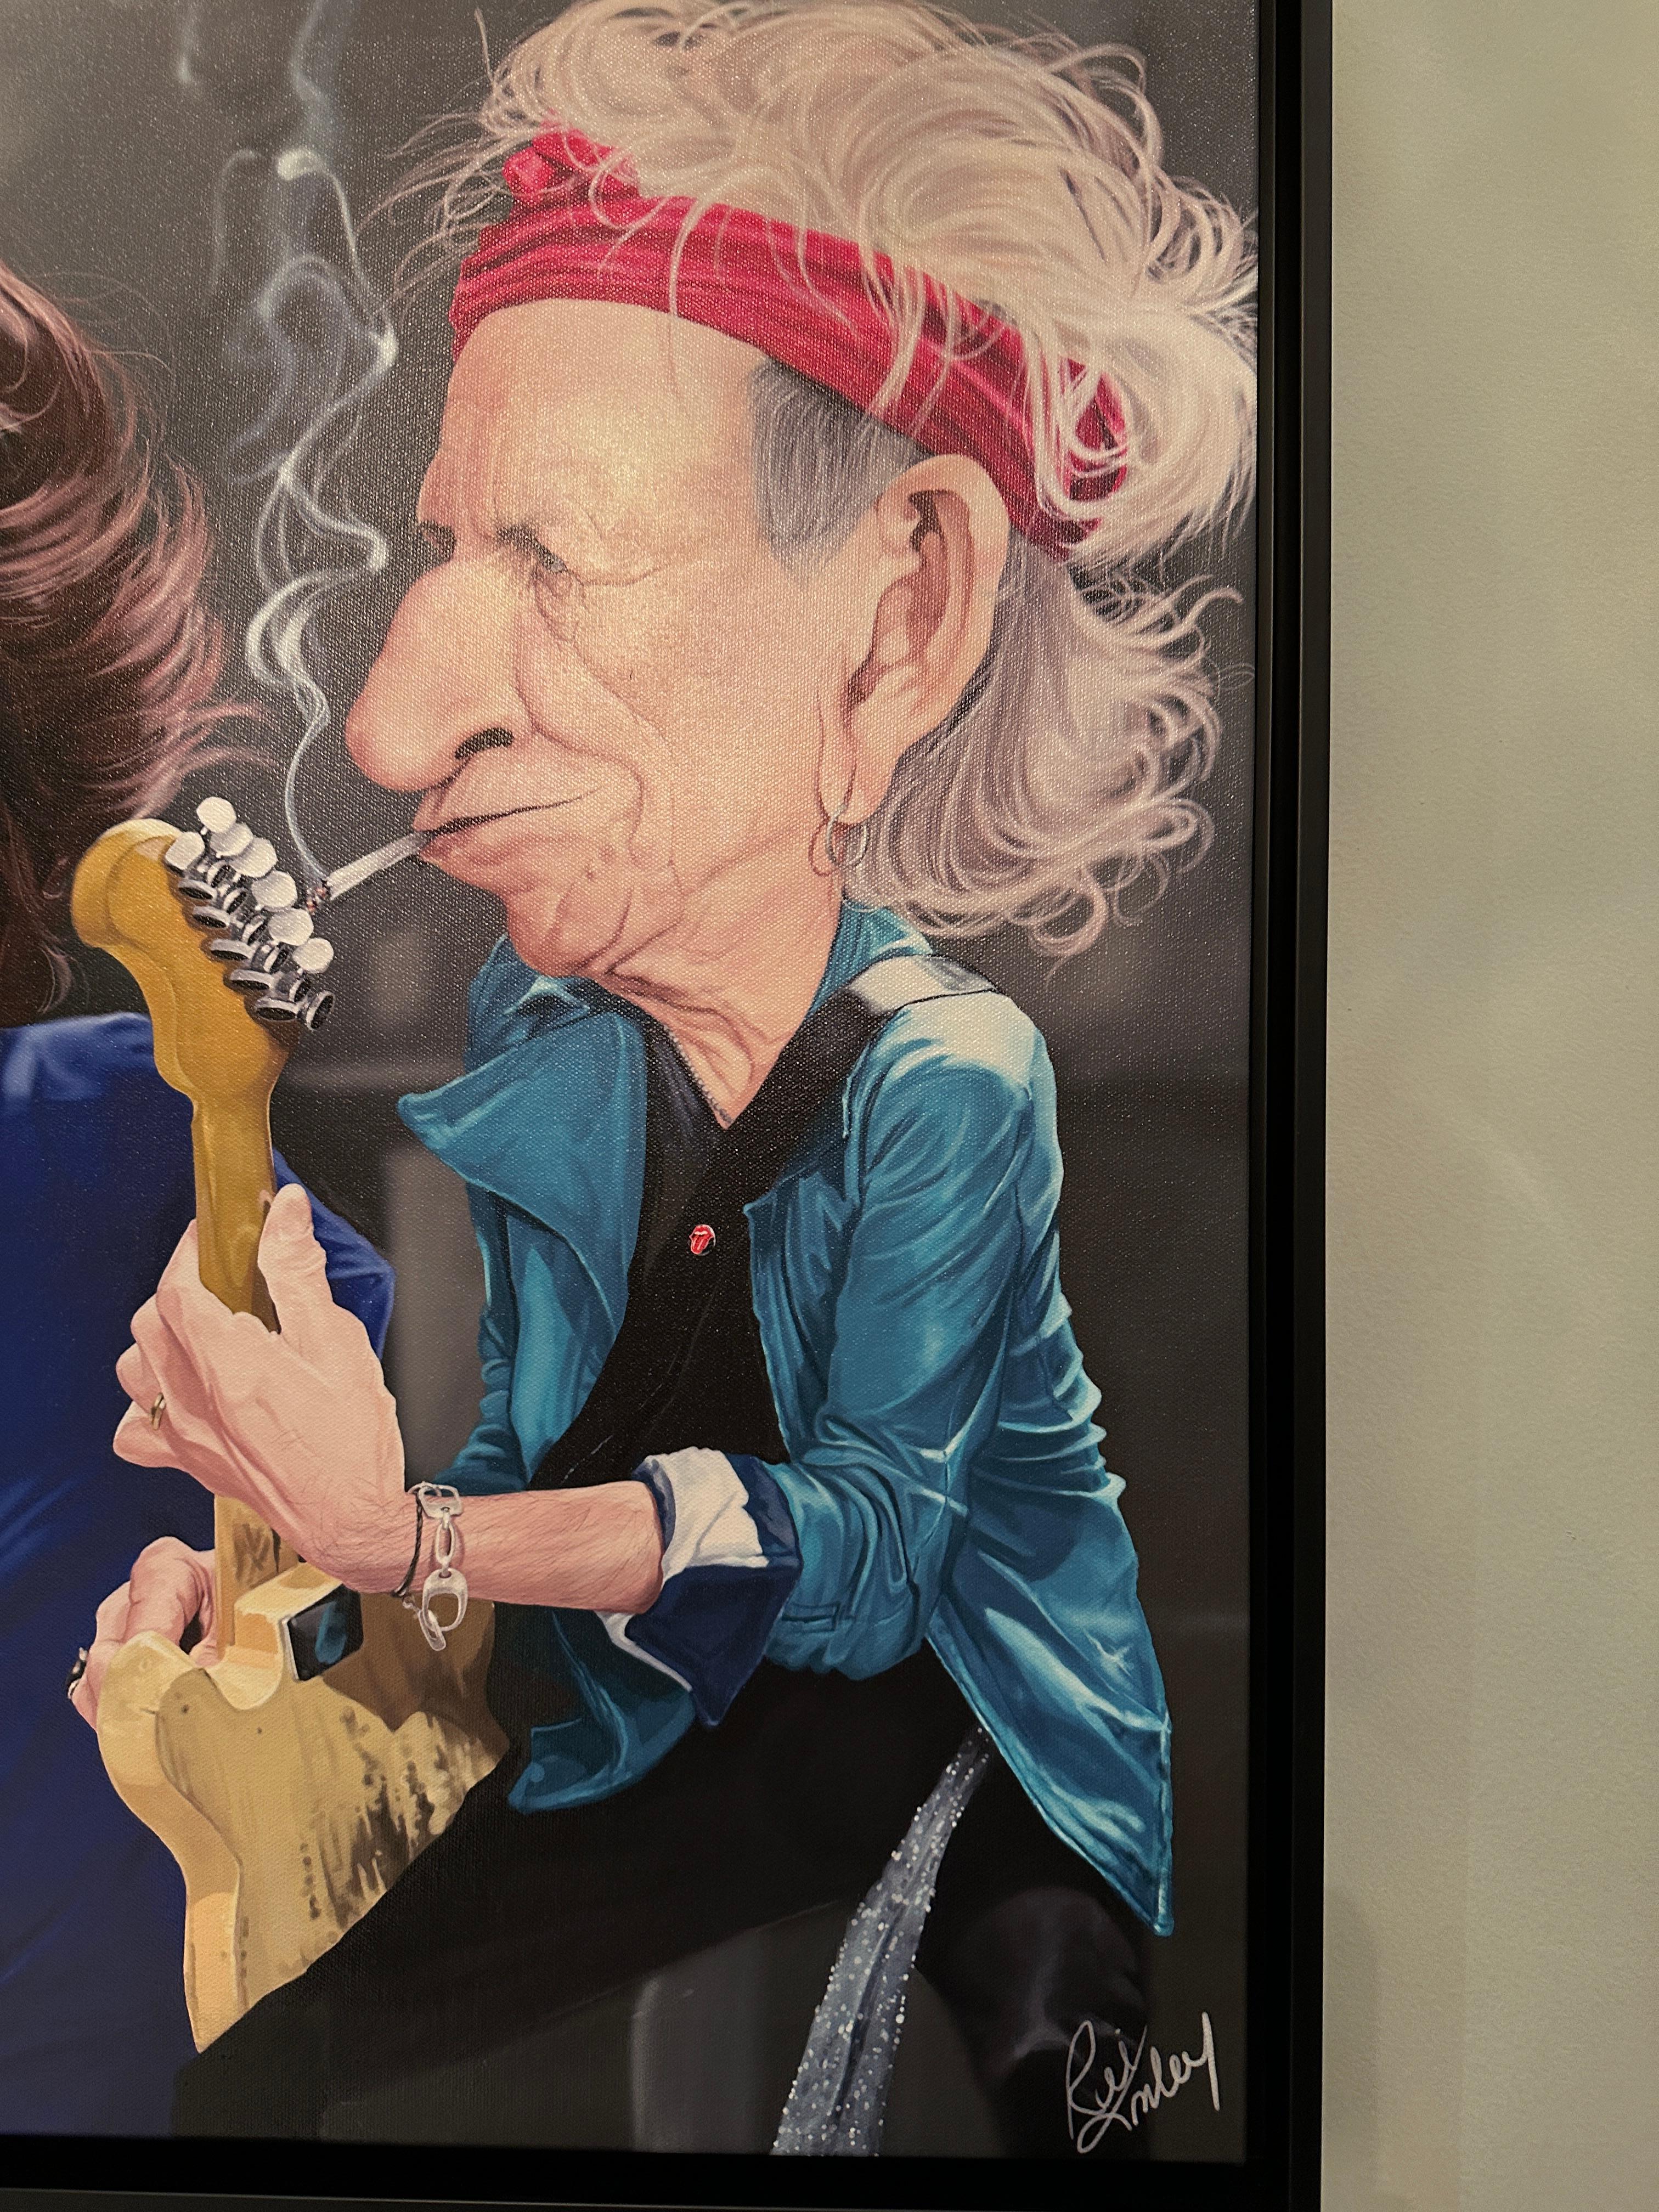 Rolling Stones Licensed Artwork on Canvas 4